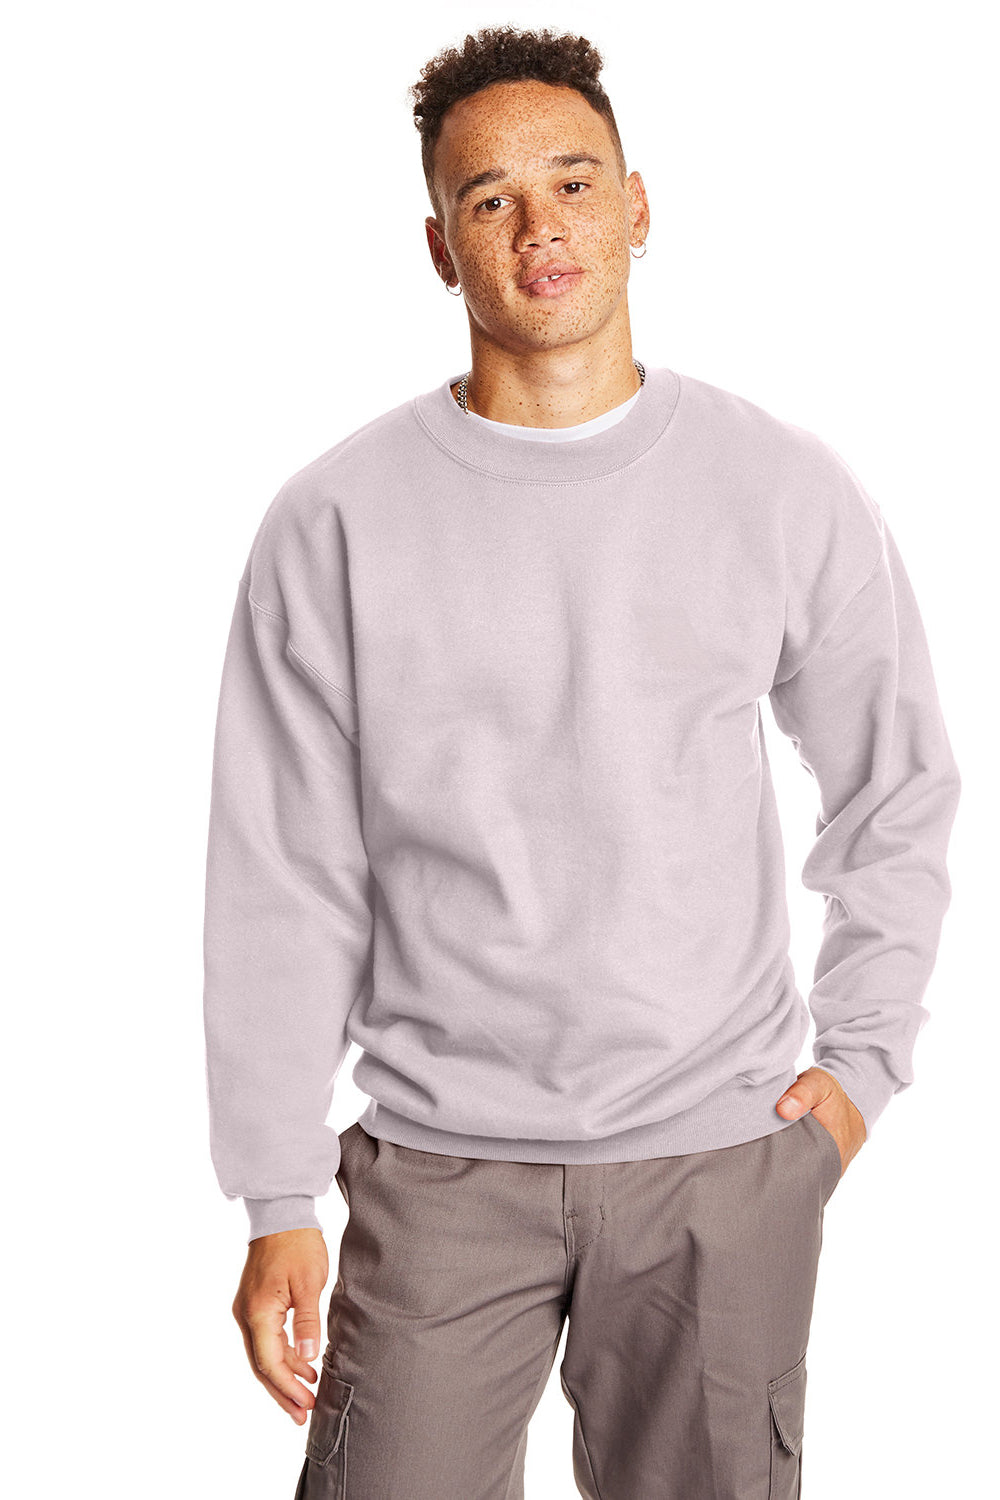 Hanes F260 Mens Ultimate Cotton PrintPro XP Crewneck Sweatshirt Pale Pink Front